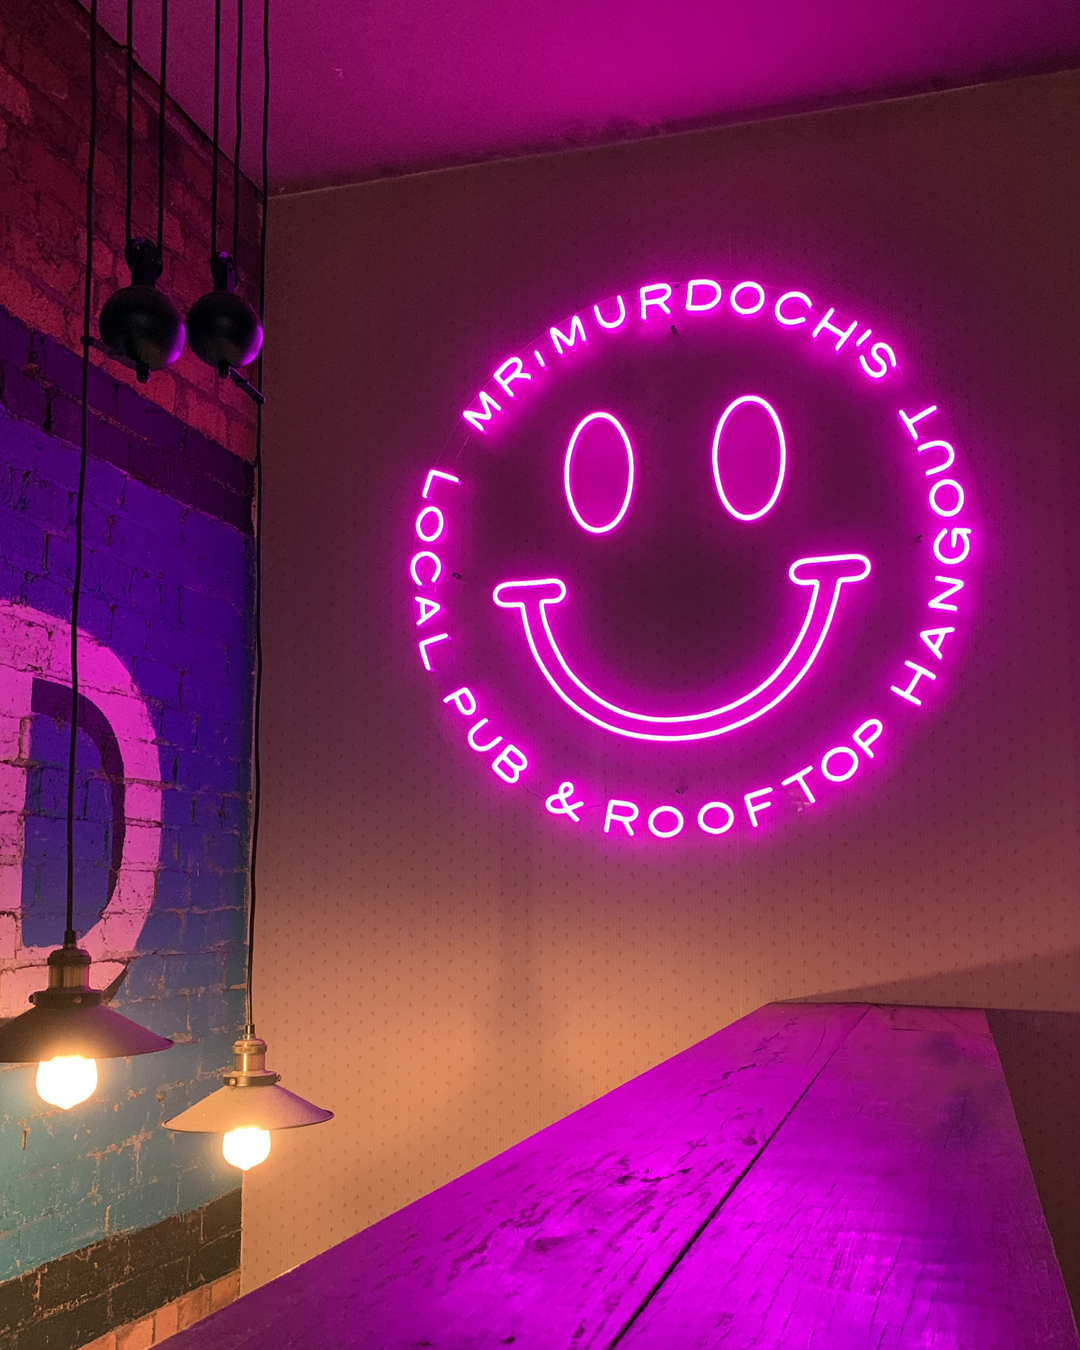 Murdoch's Local Pub & Rooftop Hangout business neon sign